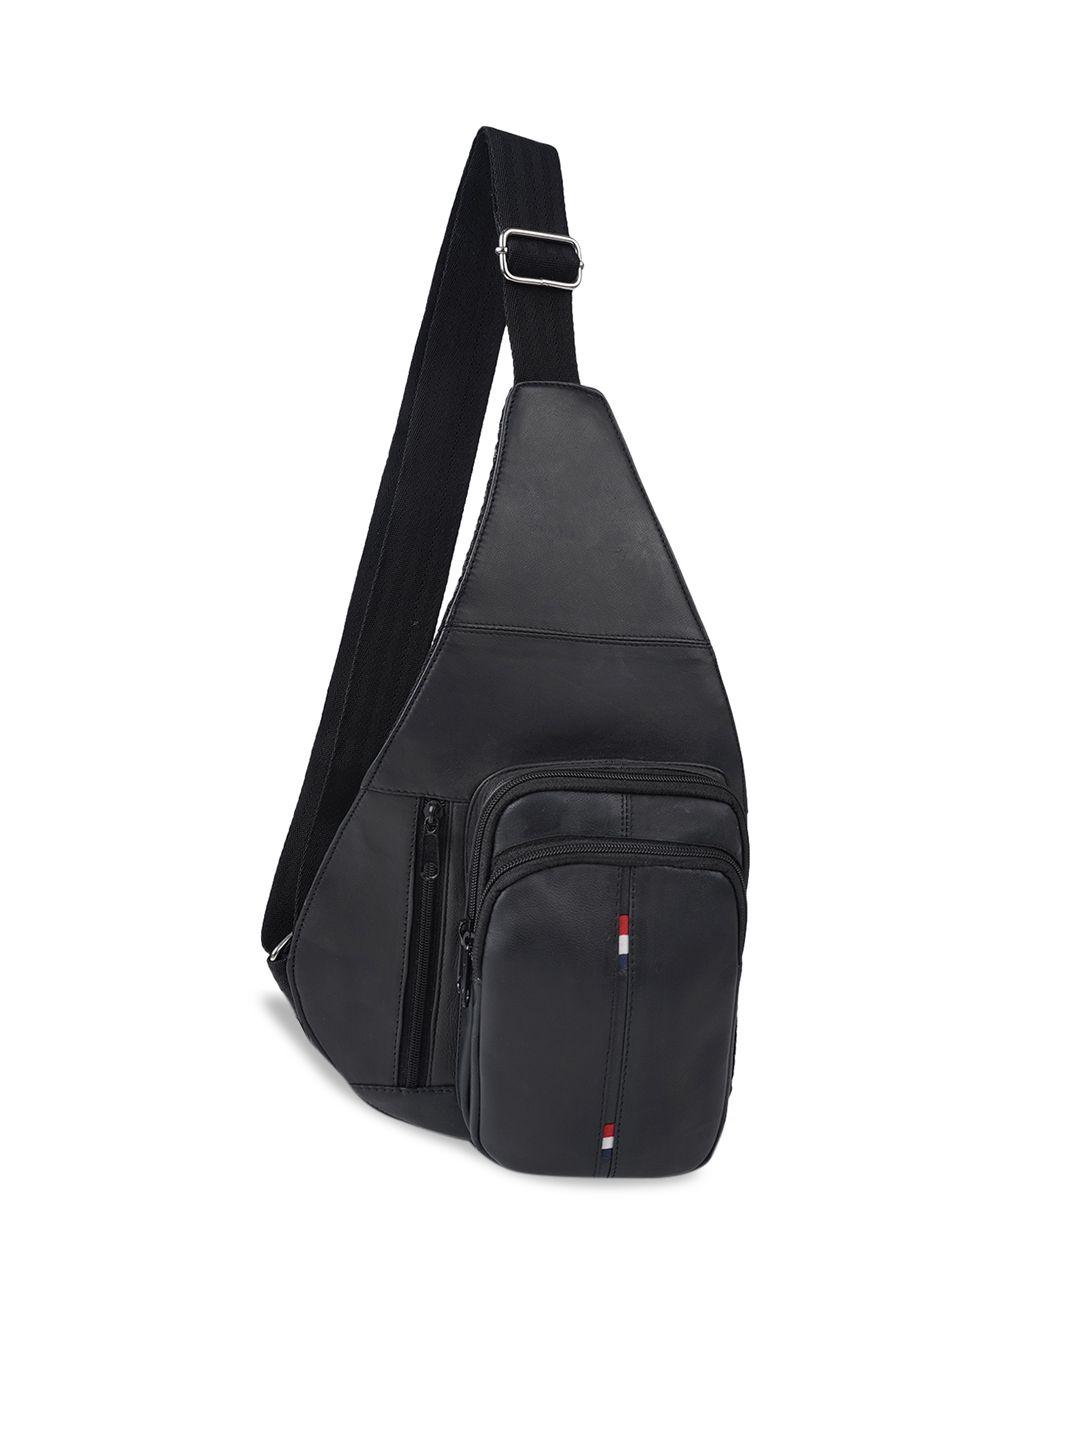 cimoni black structured sling bag